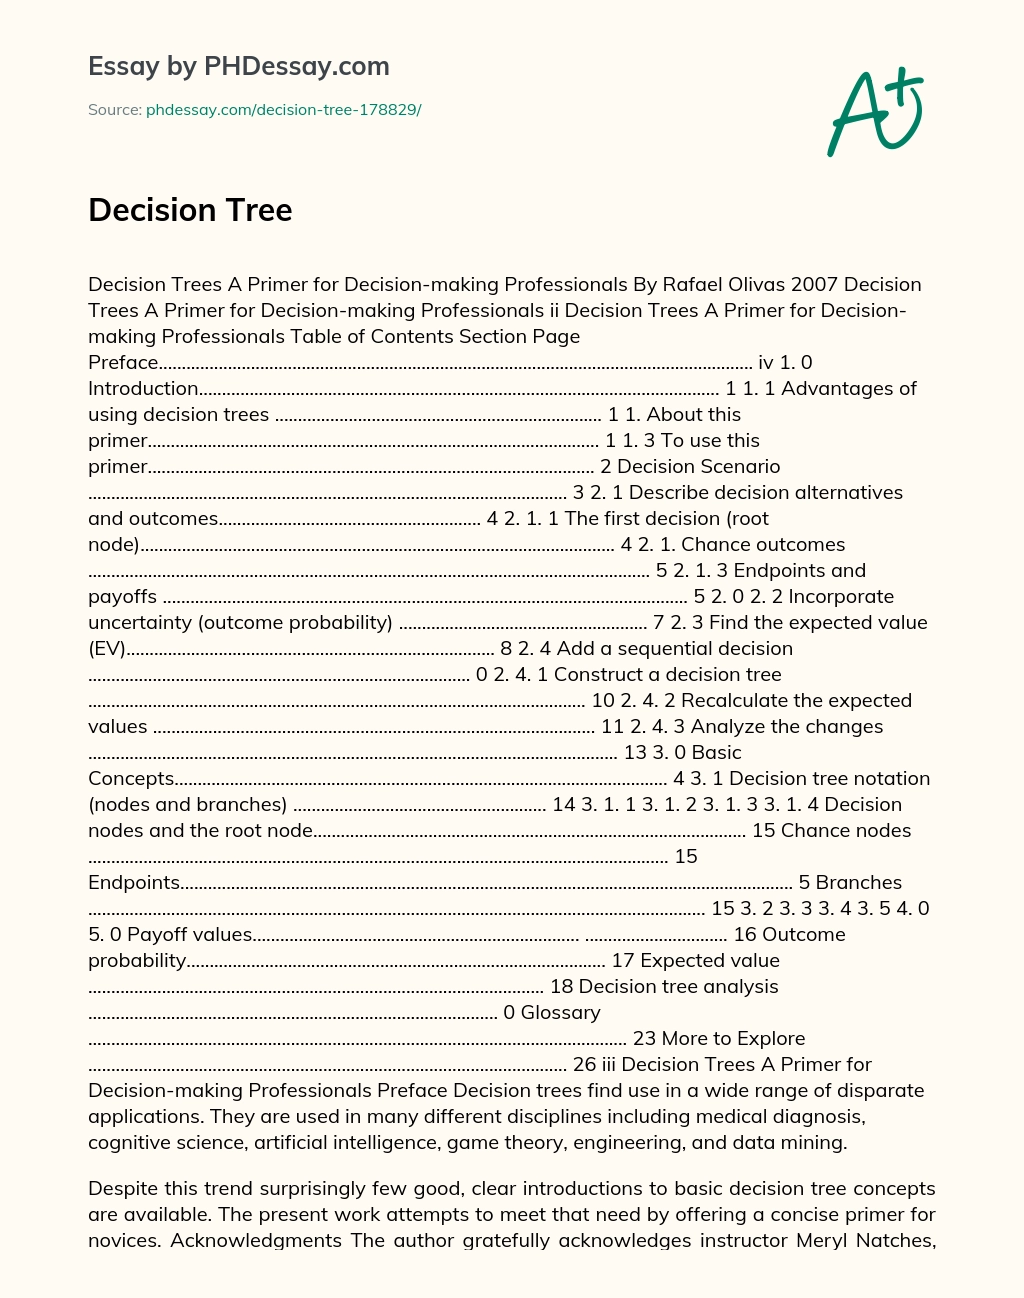 Decision Tree essay